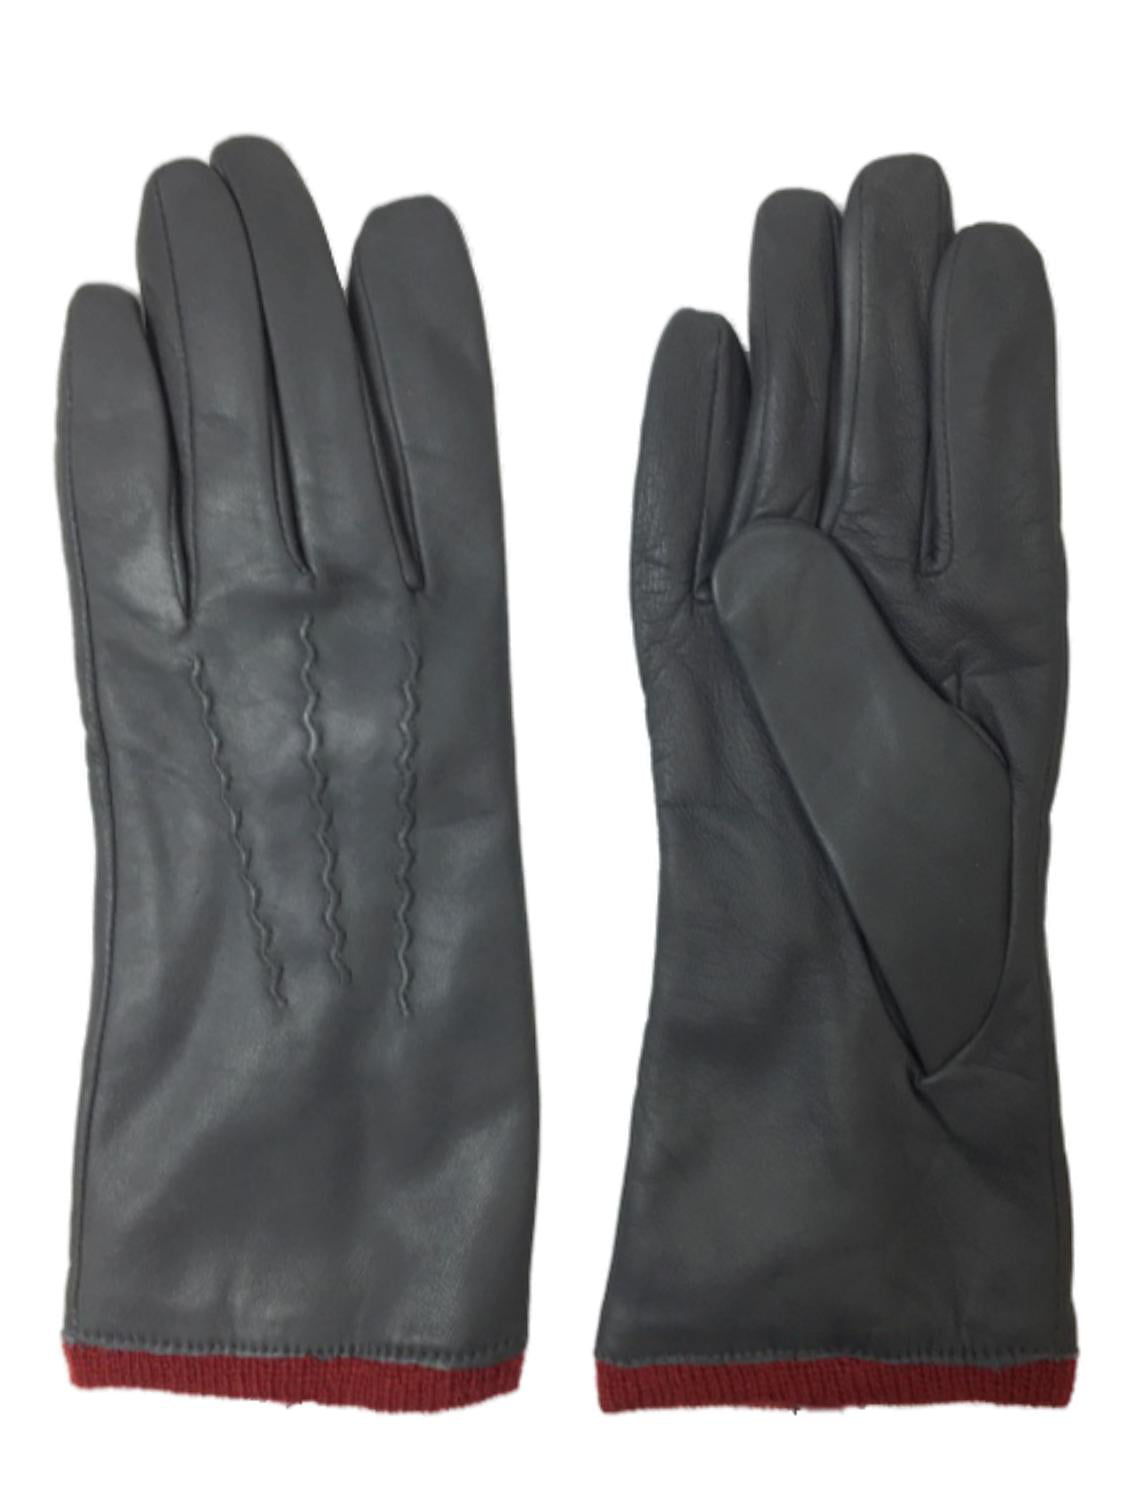 40g 3M Thinsulate Tan Medium Small Merona Womens Leather Winter Gloves 